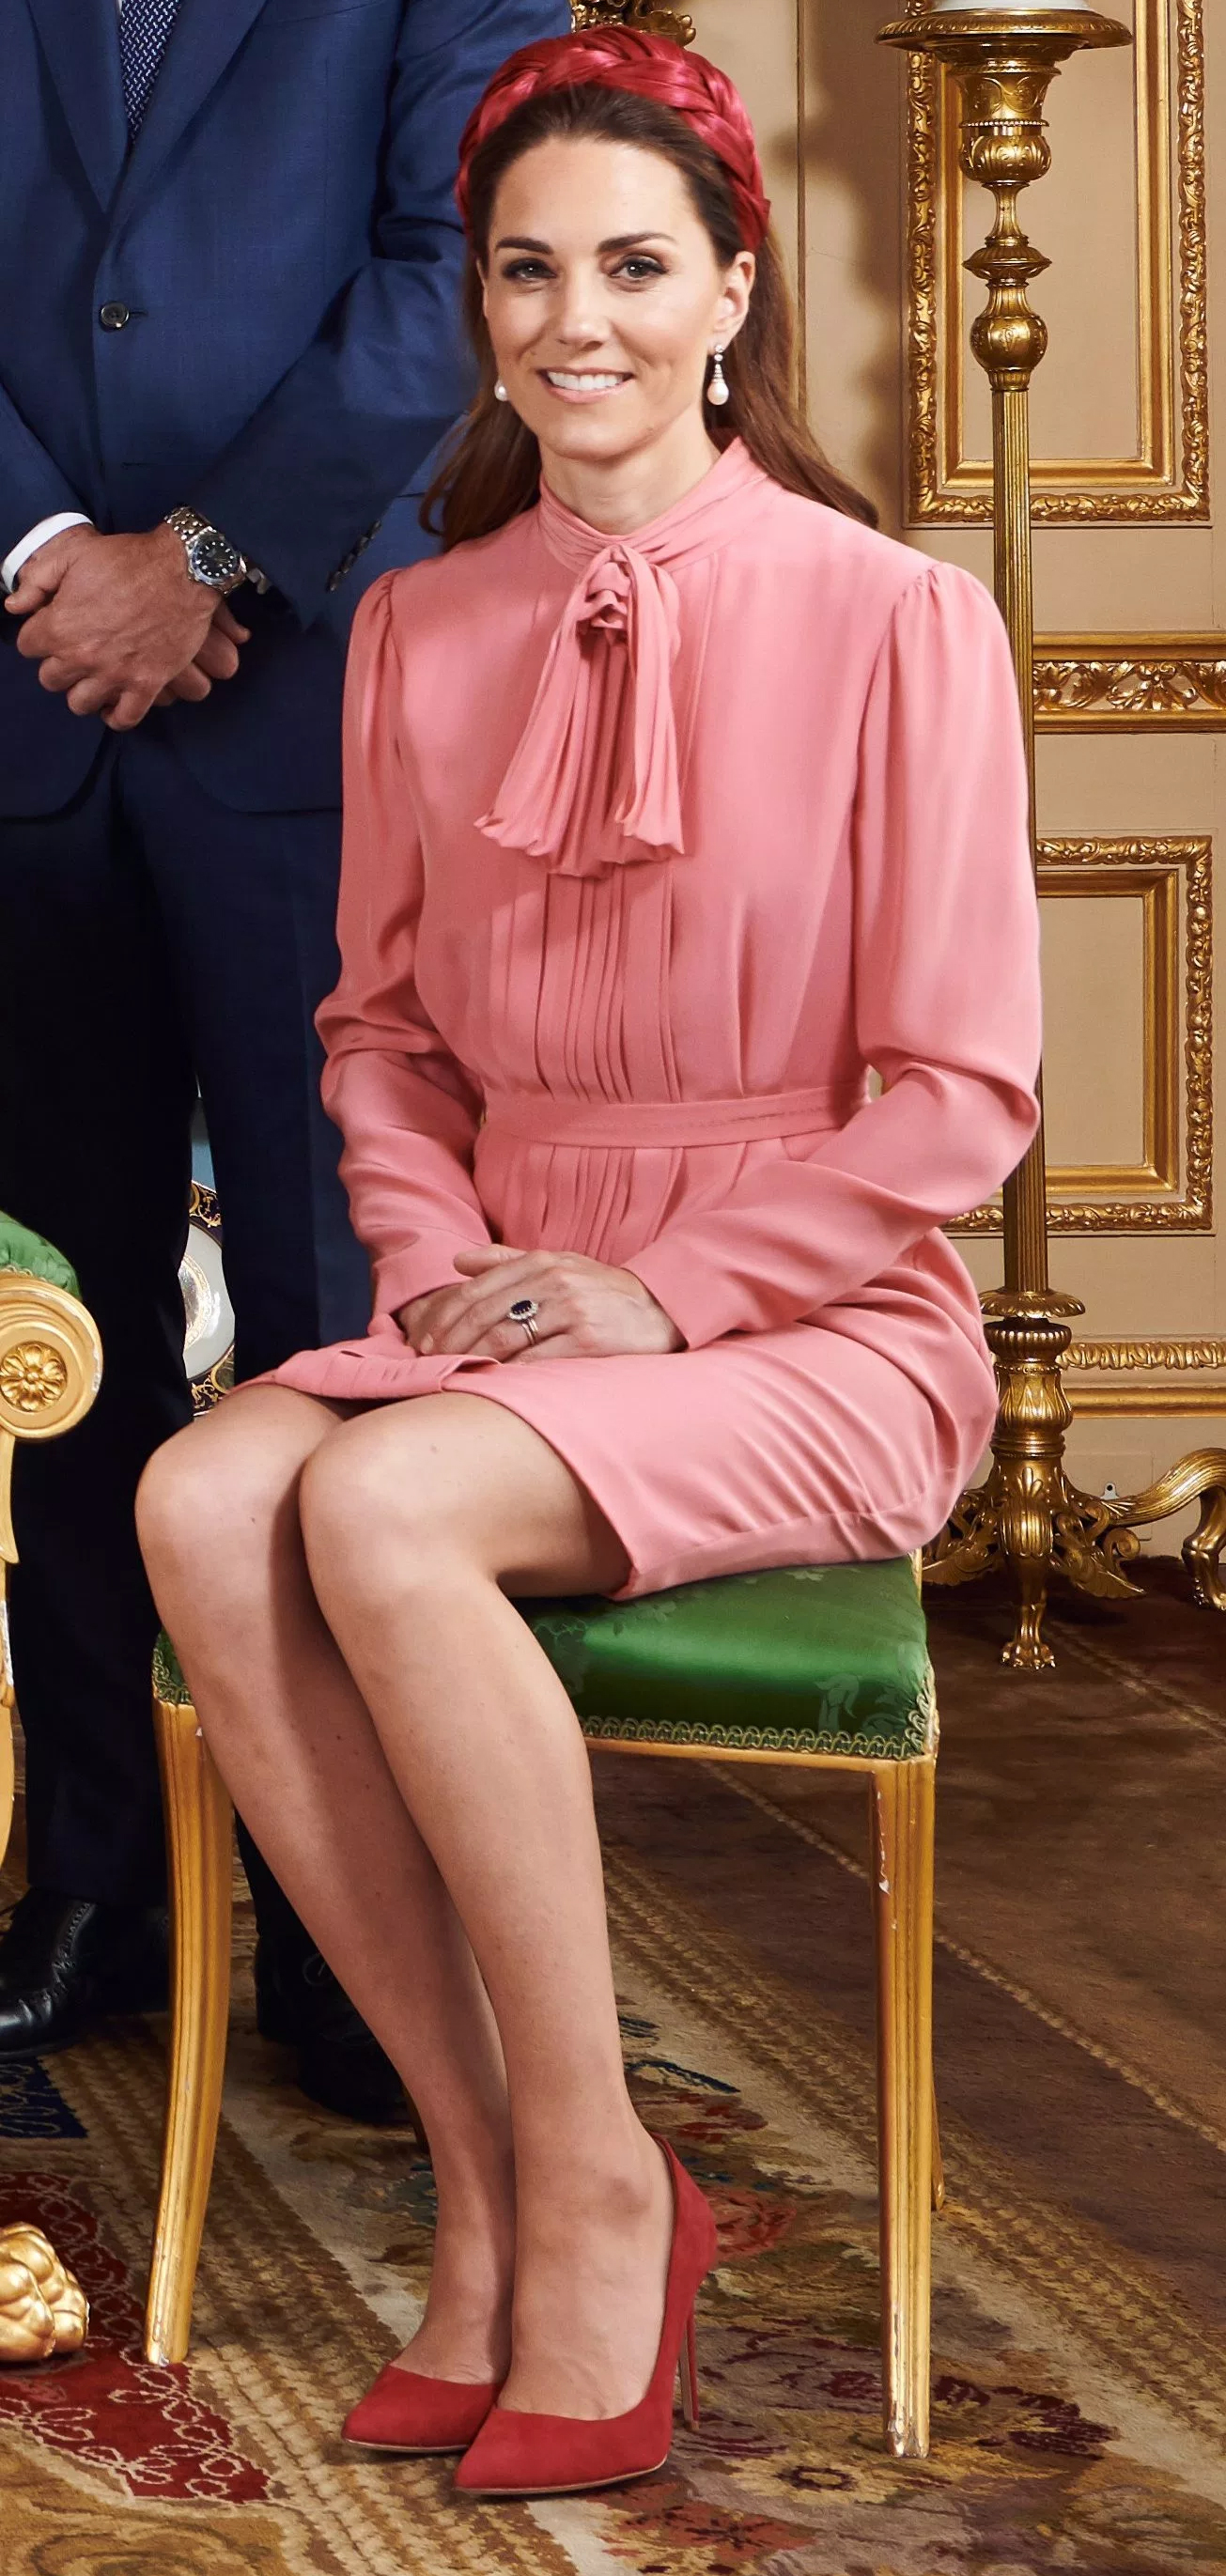 Vestido de noiva da Duquesa Kate Middleton